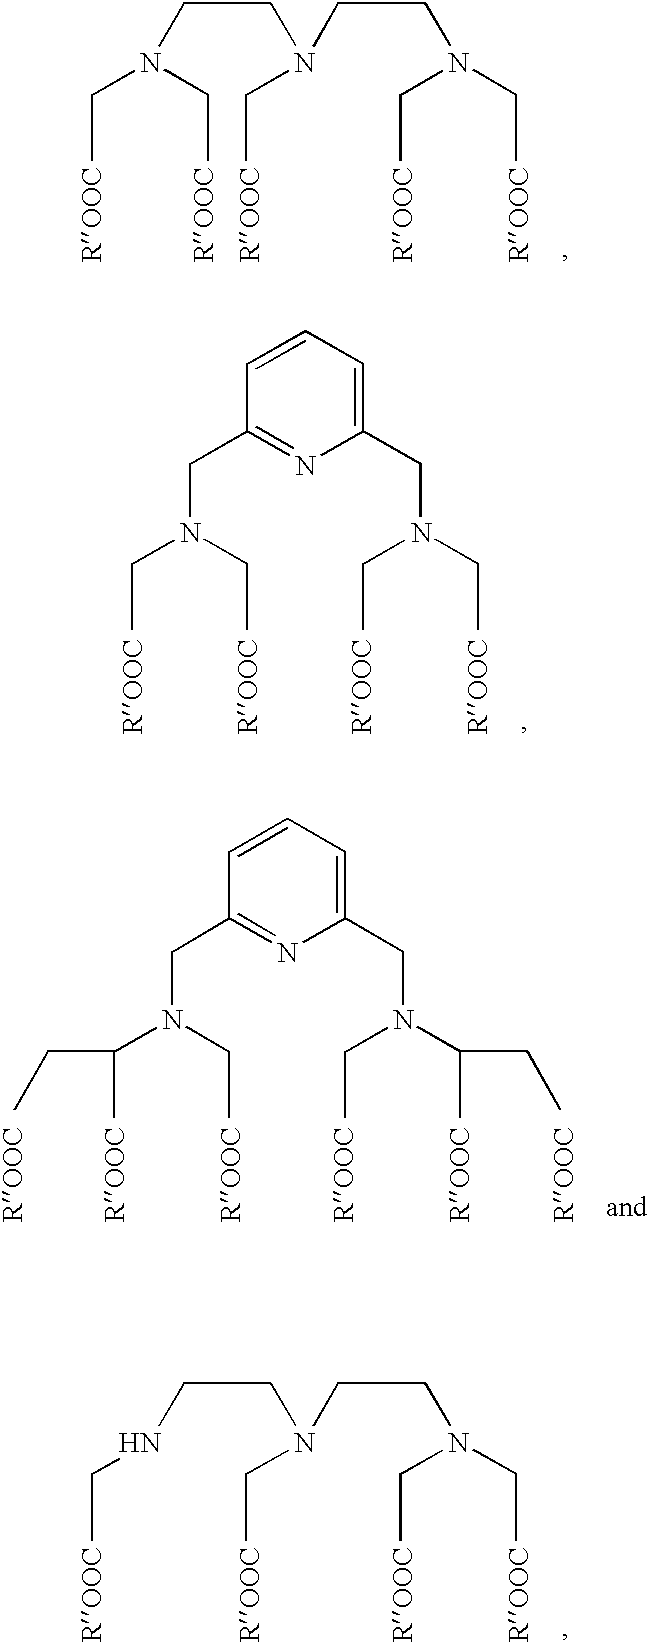 Oligonucleotide labeling reactants based on acyclonucleosides and conjugates derived thereof